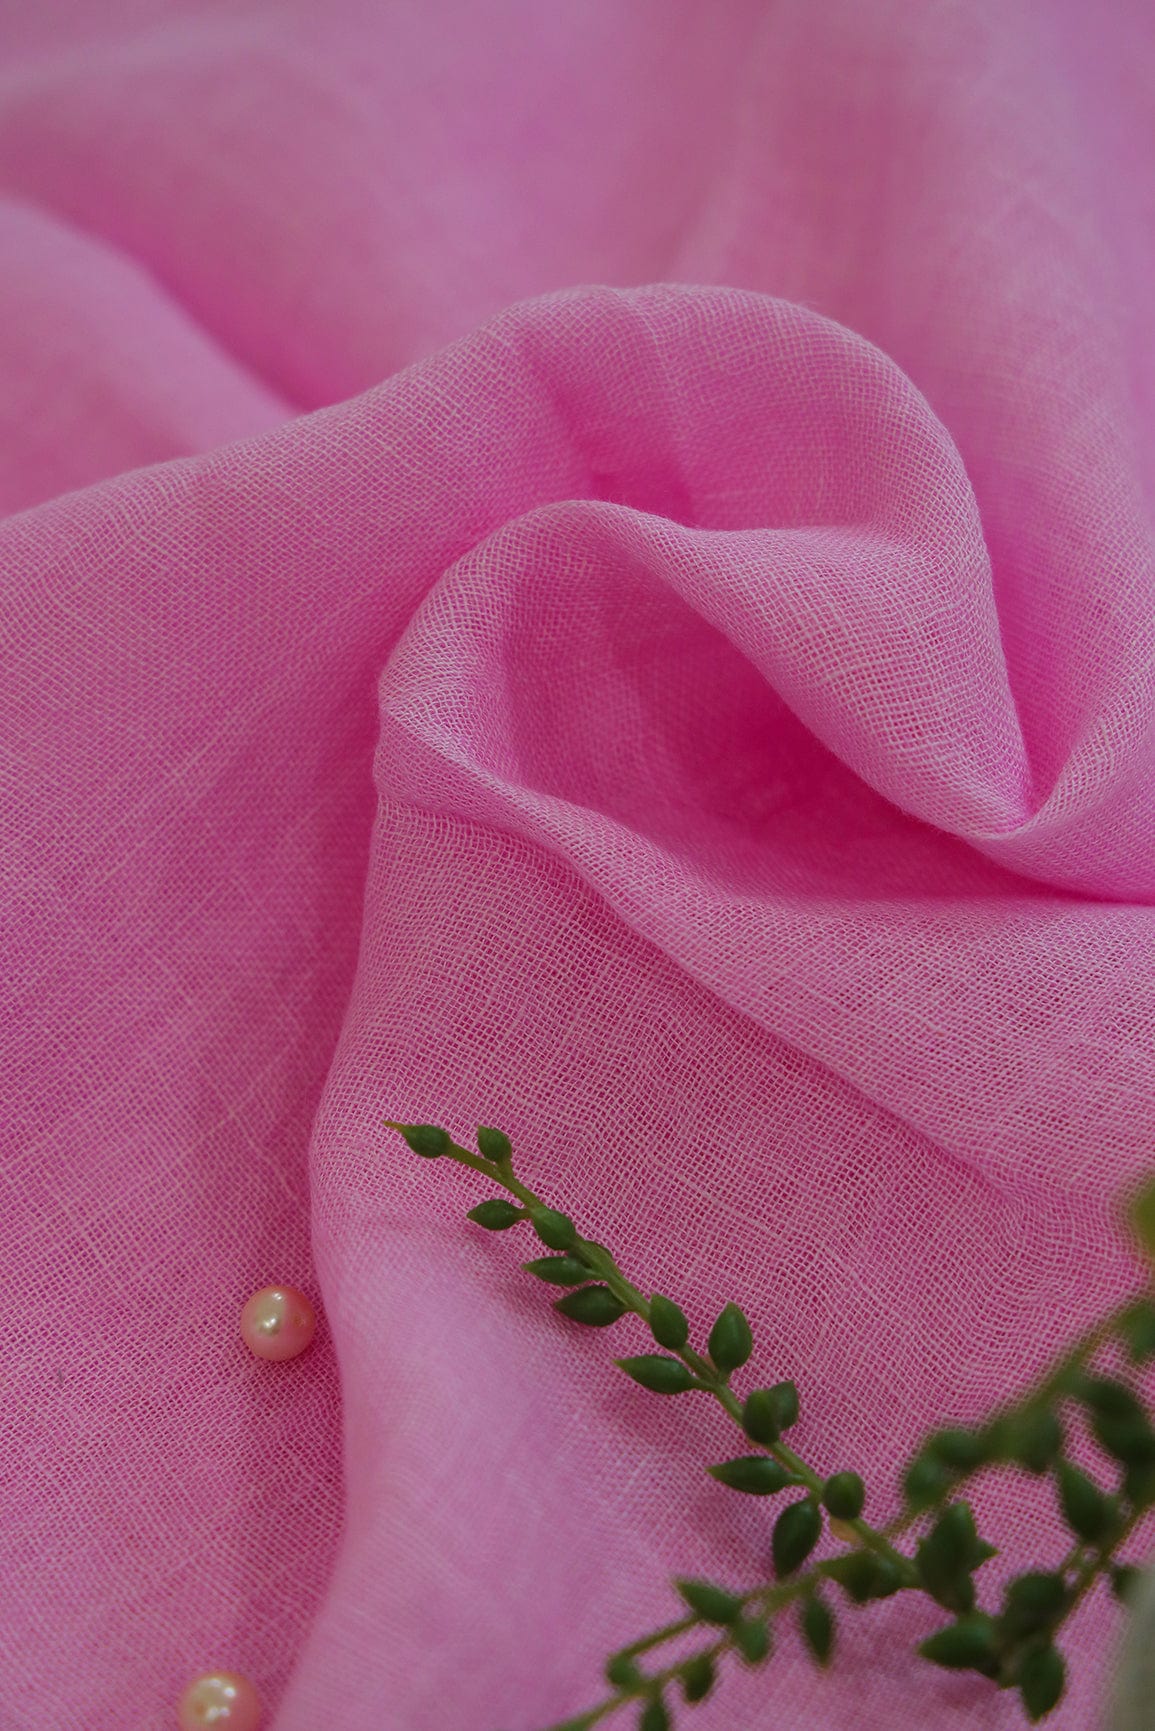 doeraa Plain Fabrics Pink Linen by Cotton Fabric